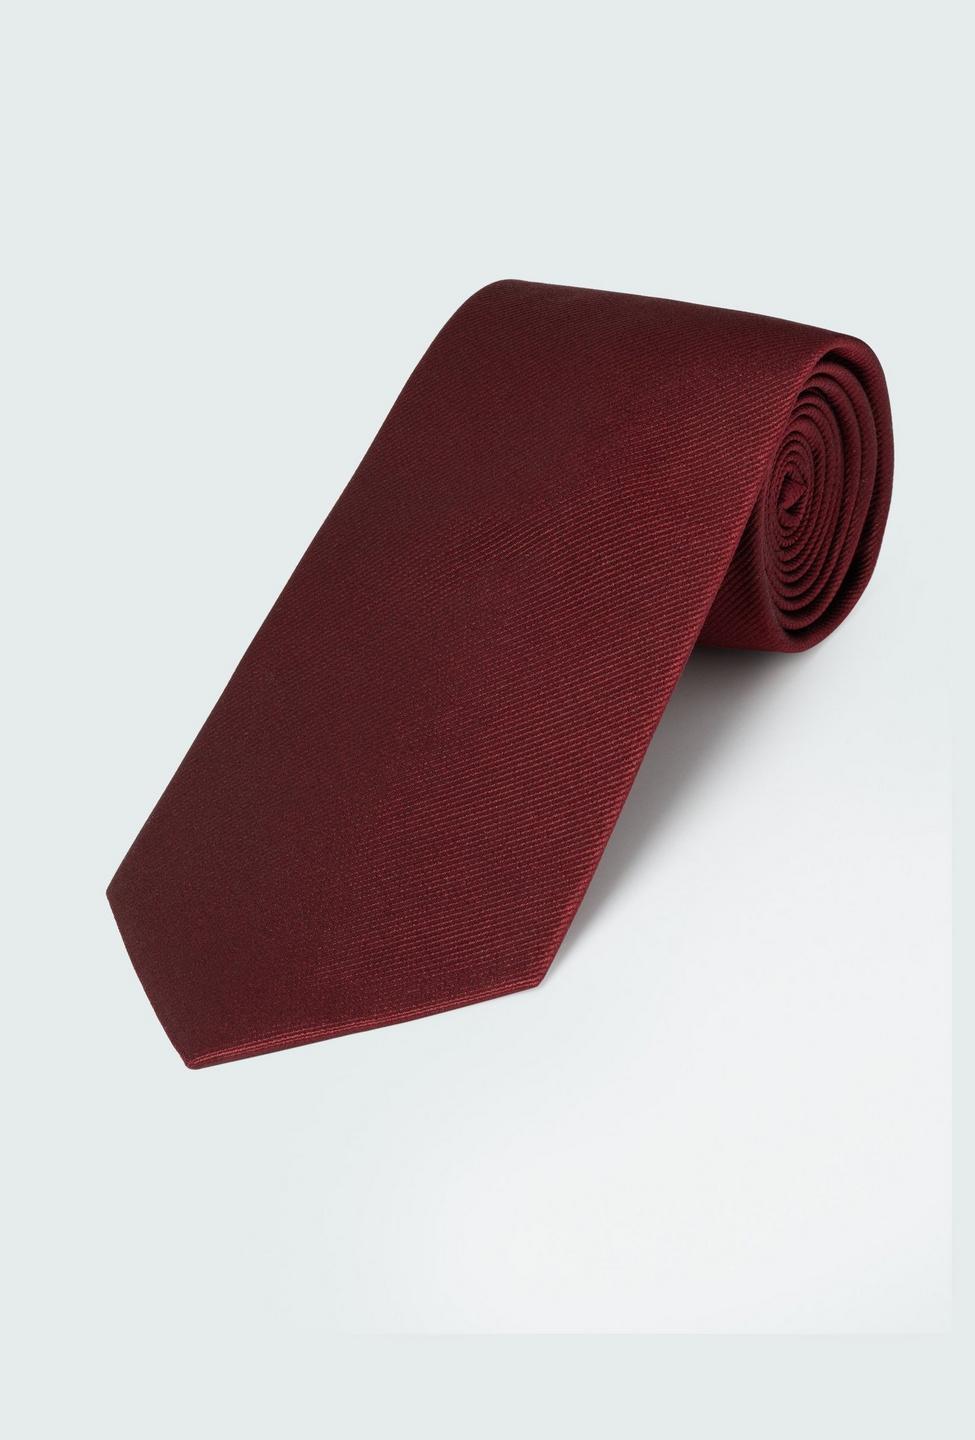 Deep Red Silk Tie